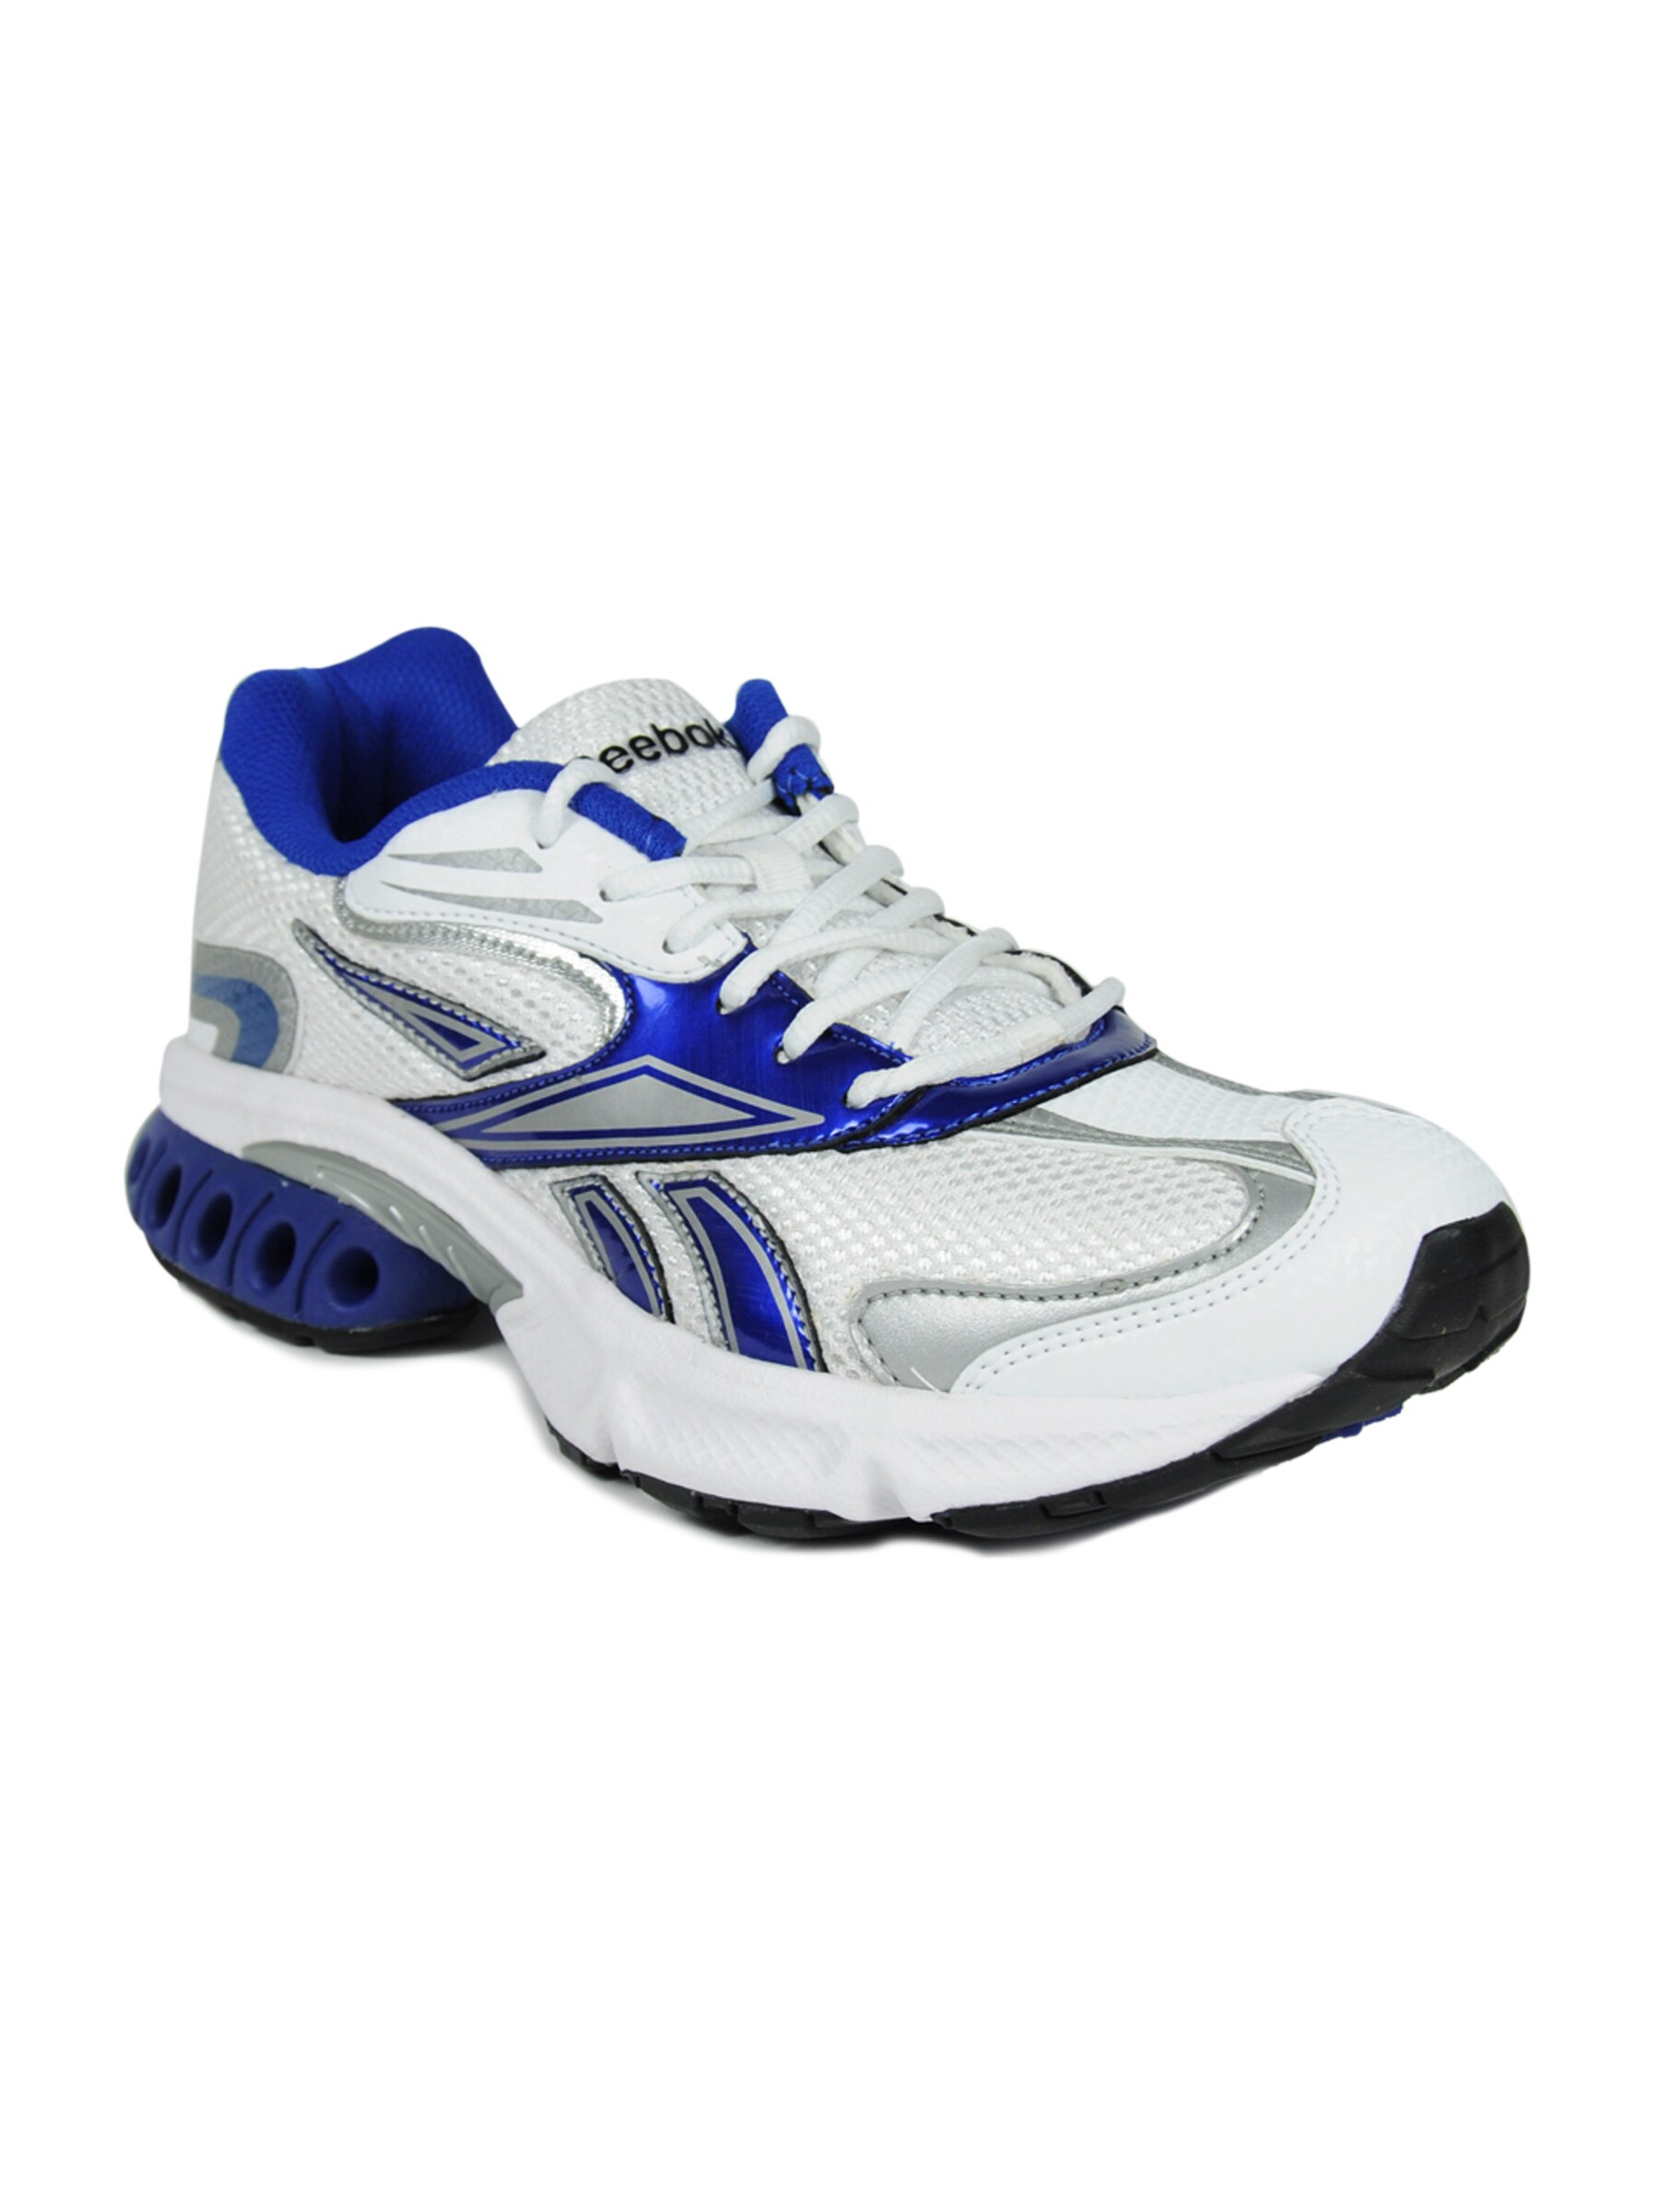 Reebok Men Run Sheer White Sports Shoes